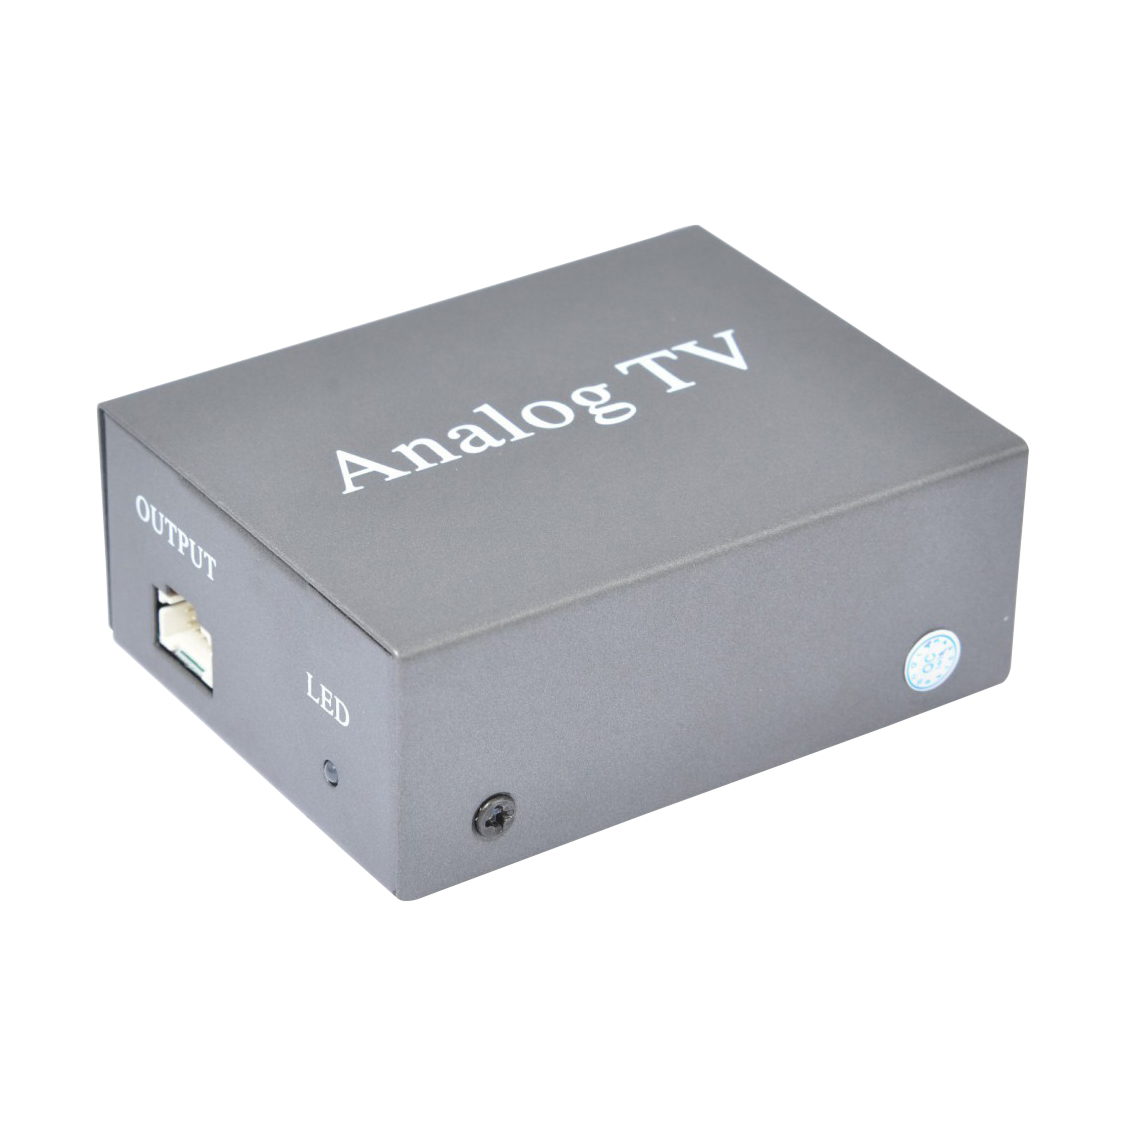 Analog TV BOX -S2012A